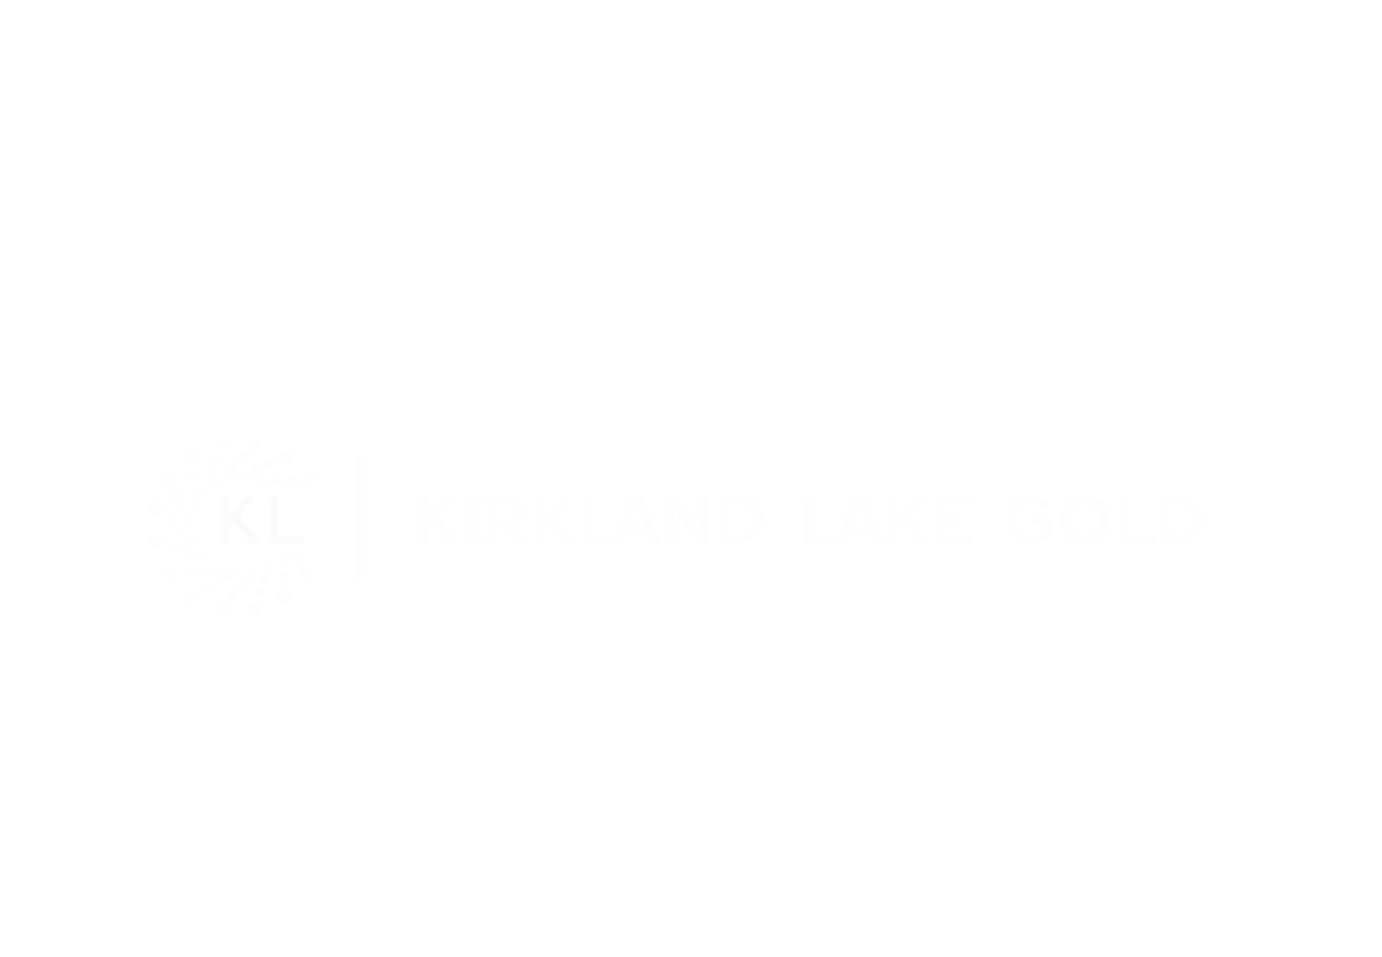 Kirkland Lake Gold